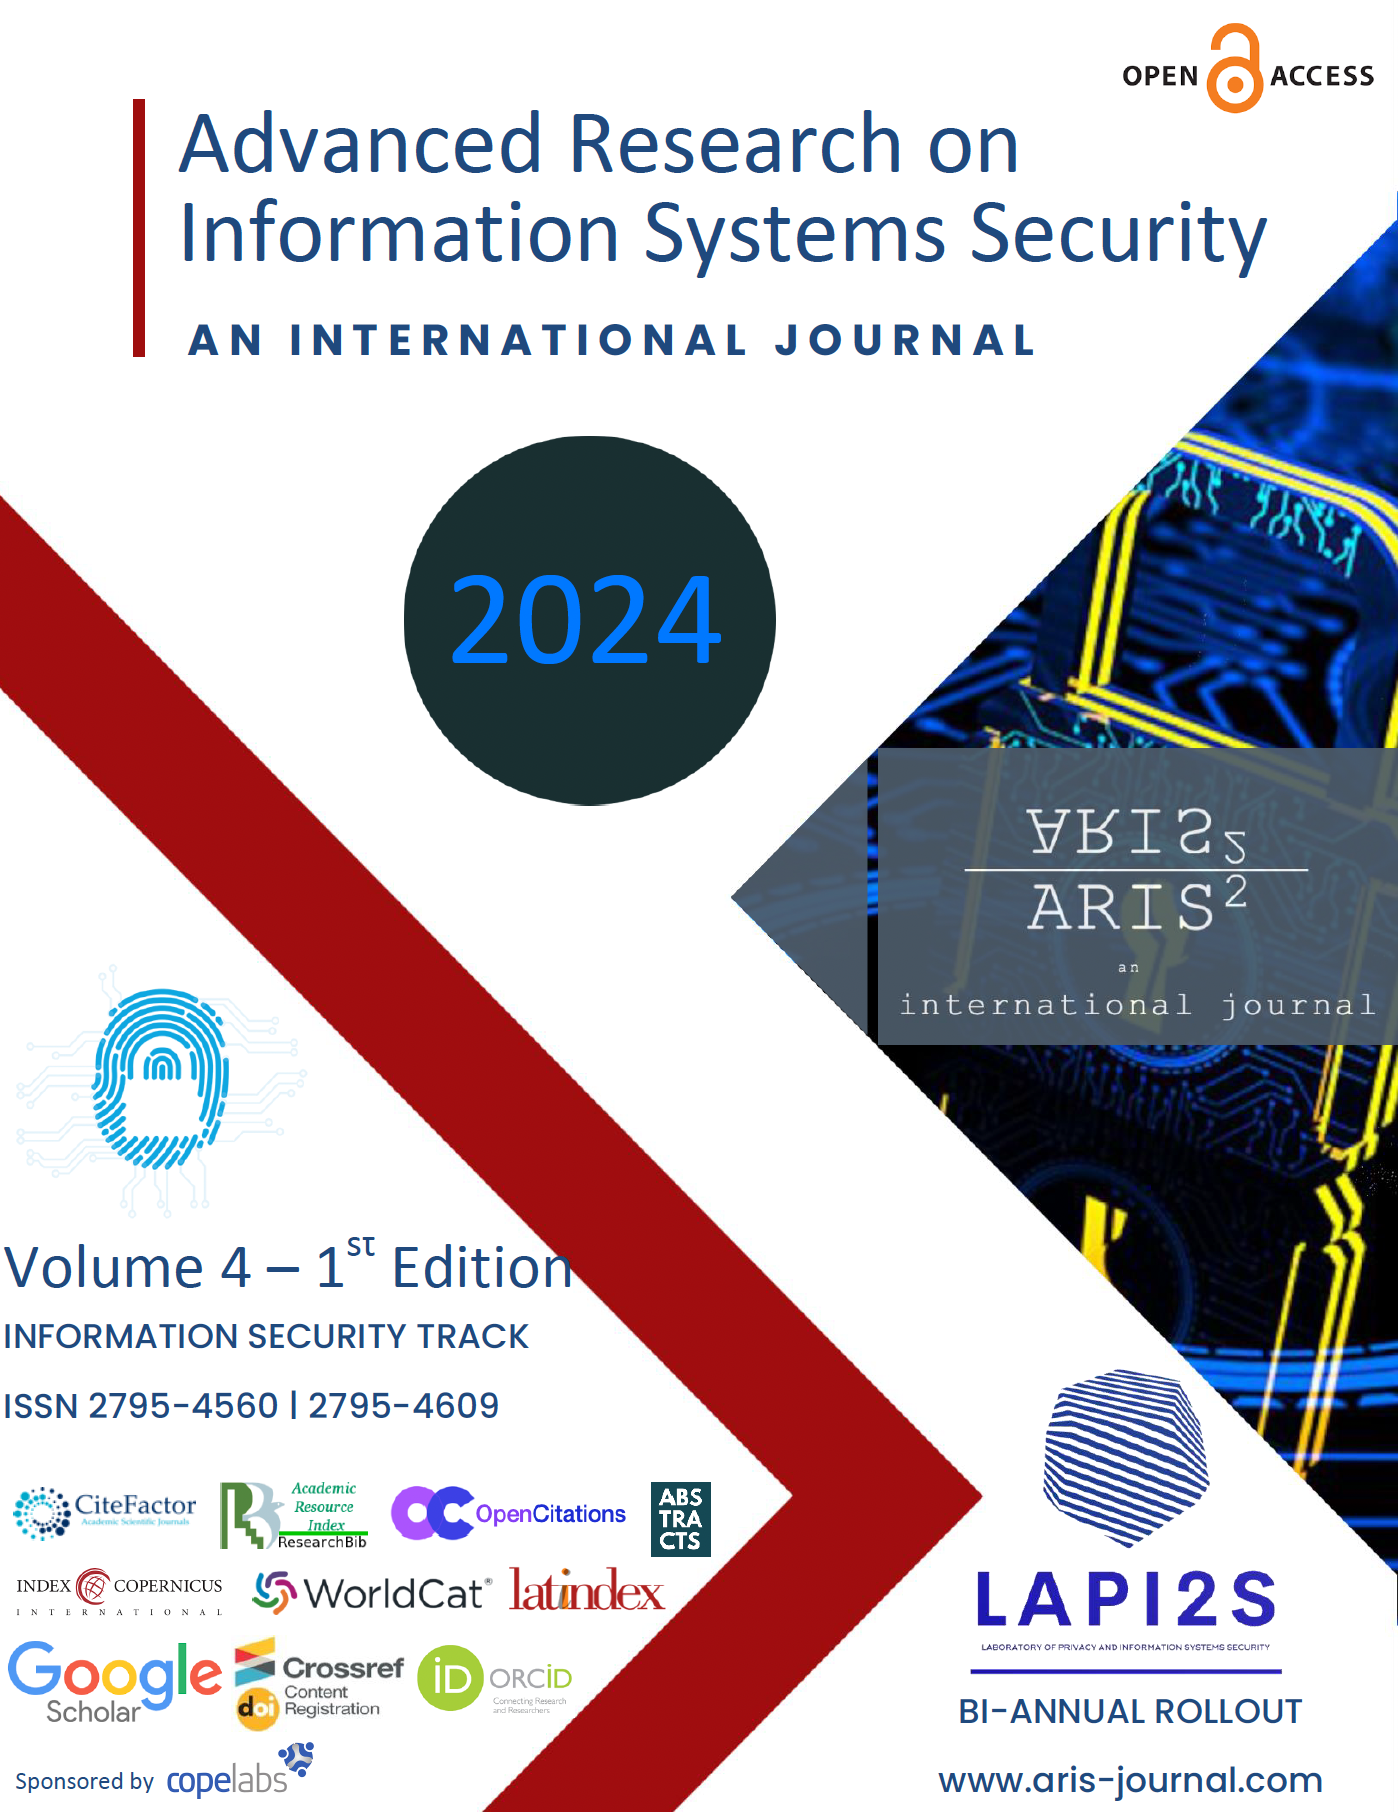 Aris-Journal Cover 2022